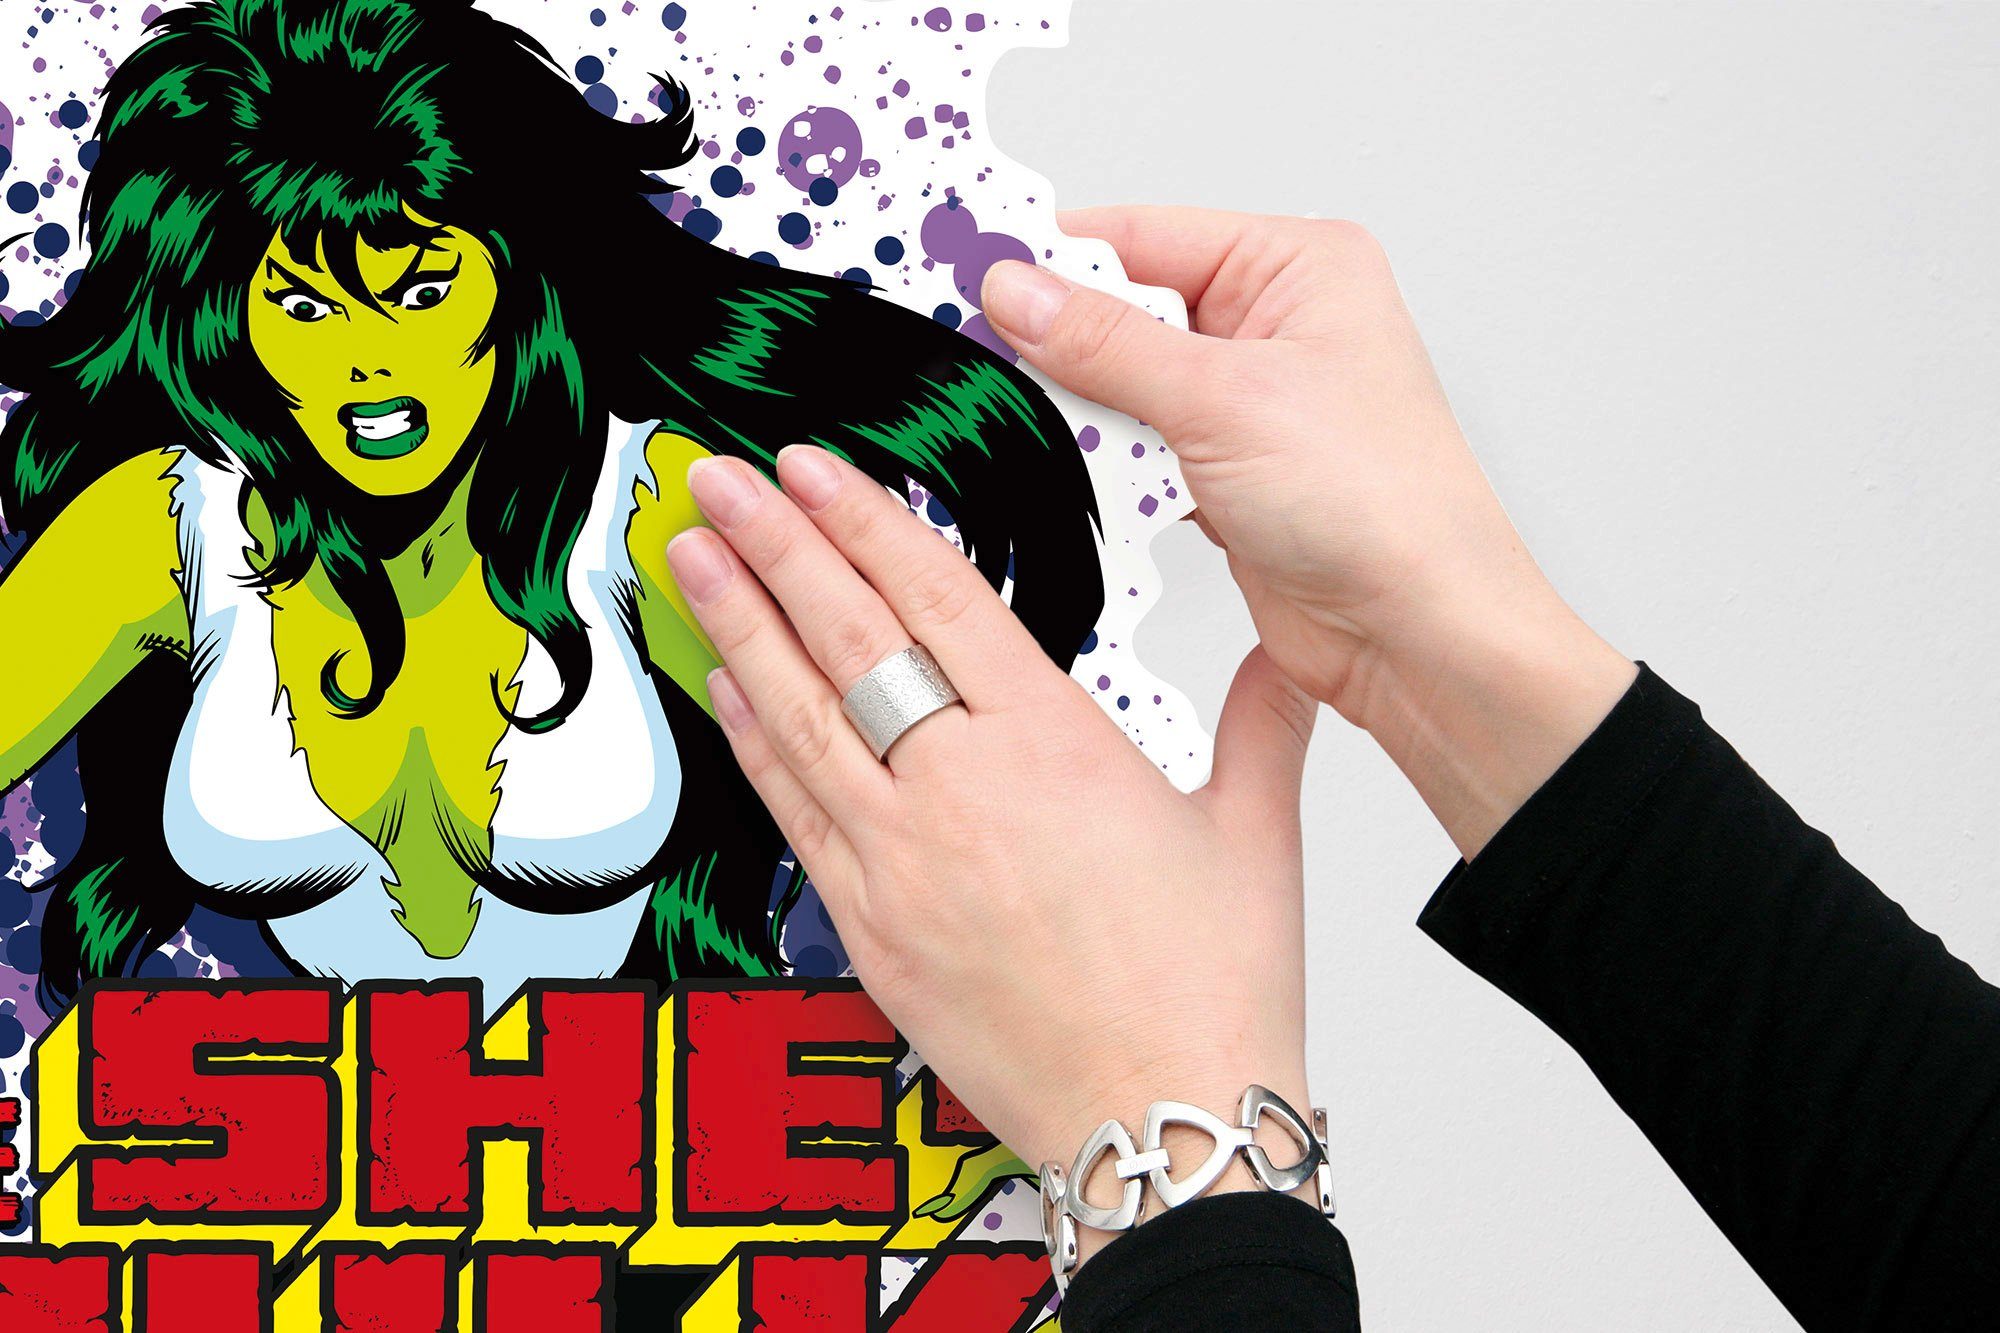 Classic She-Hulk Wandtattoo (Breite Höhe), Komar 50x70 x (1 selbstklebendes St), cm Wandtattoo Comic